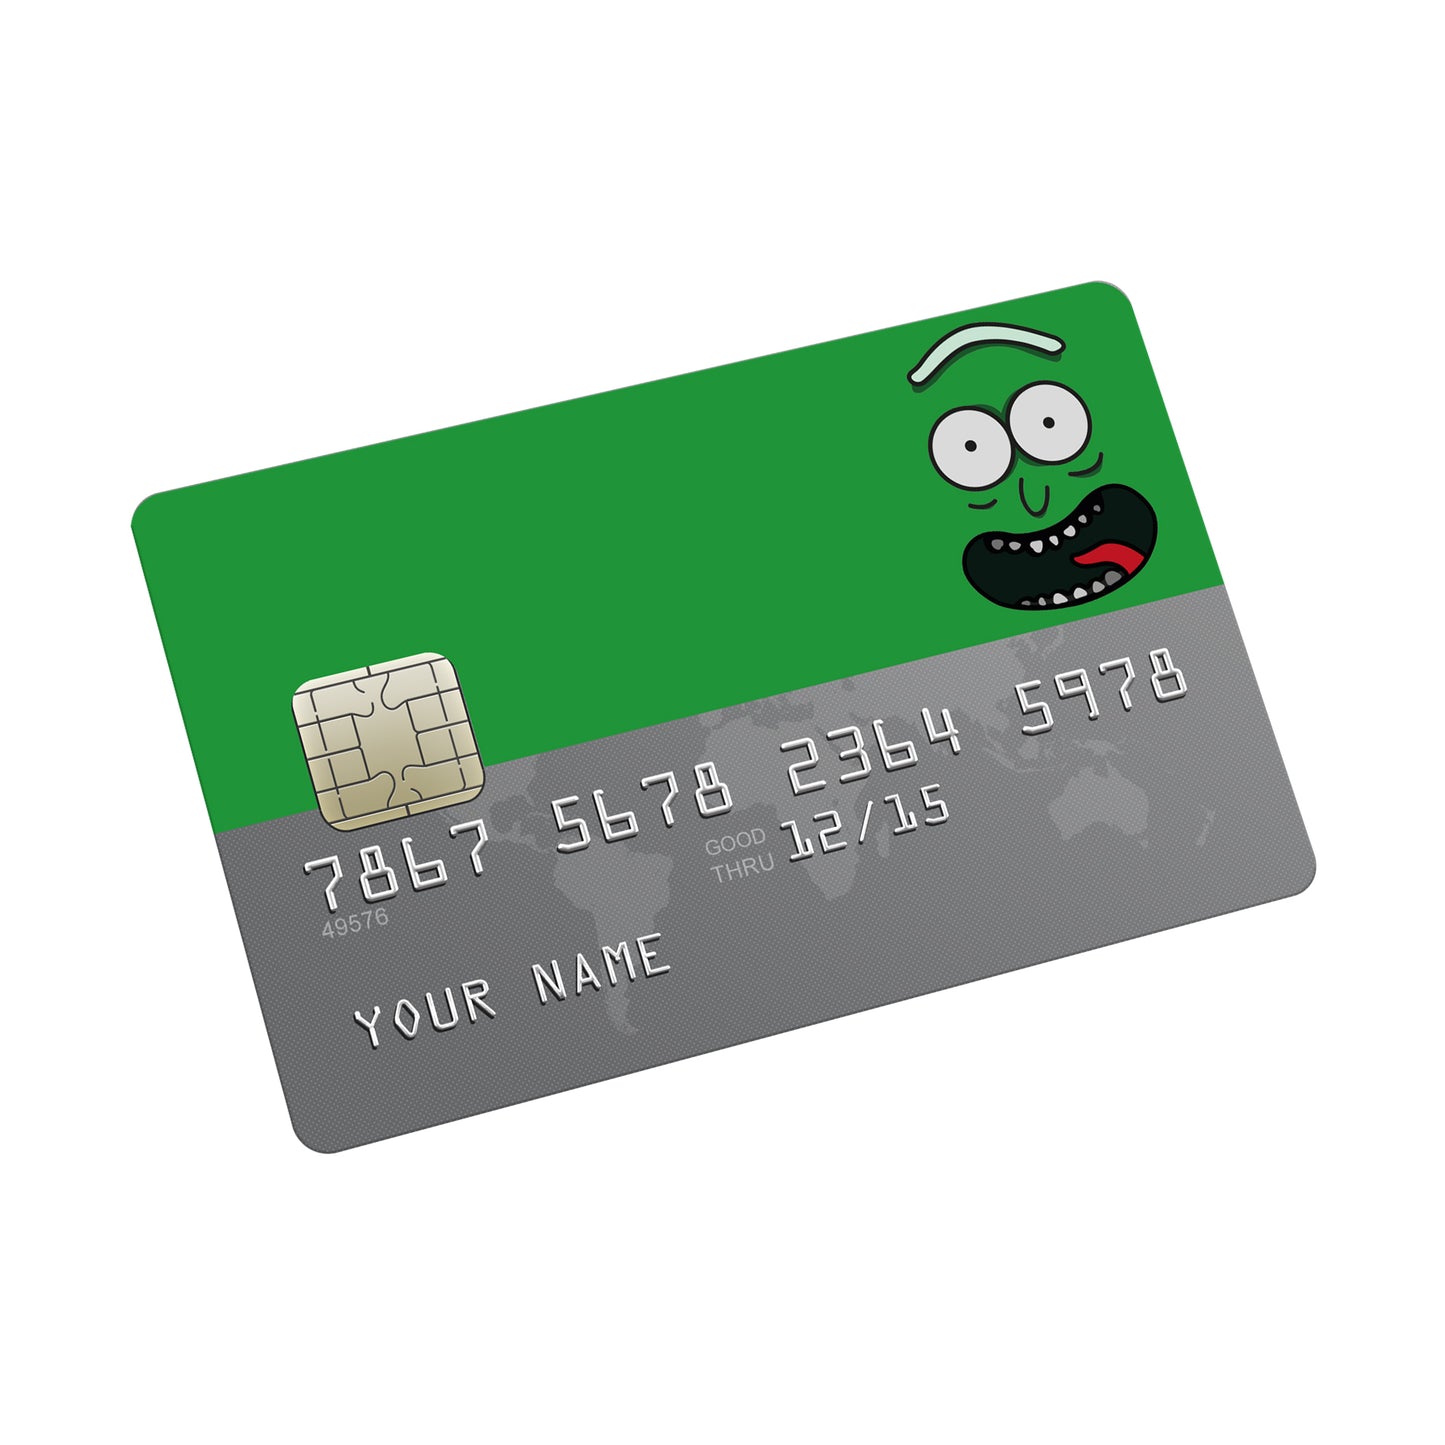 Rick Credit Card Sticker